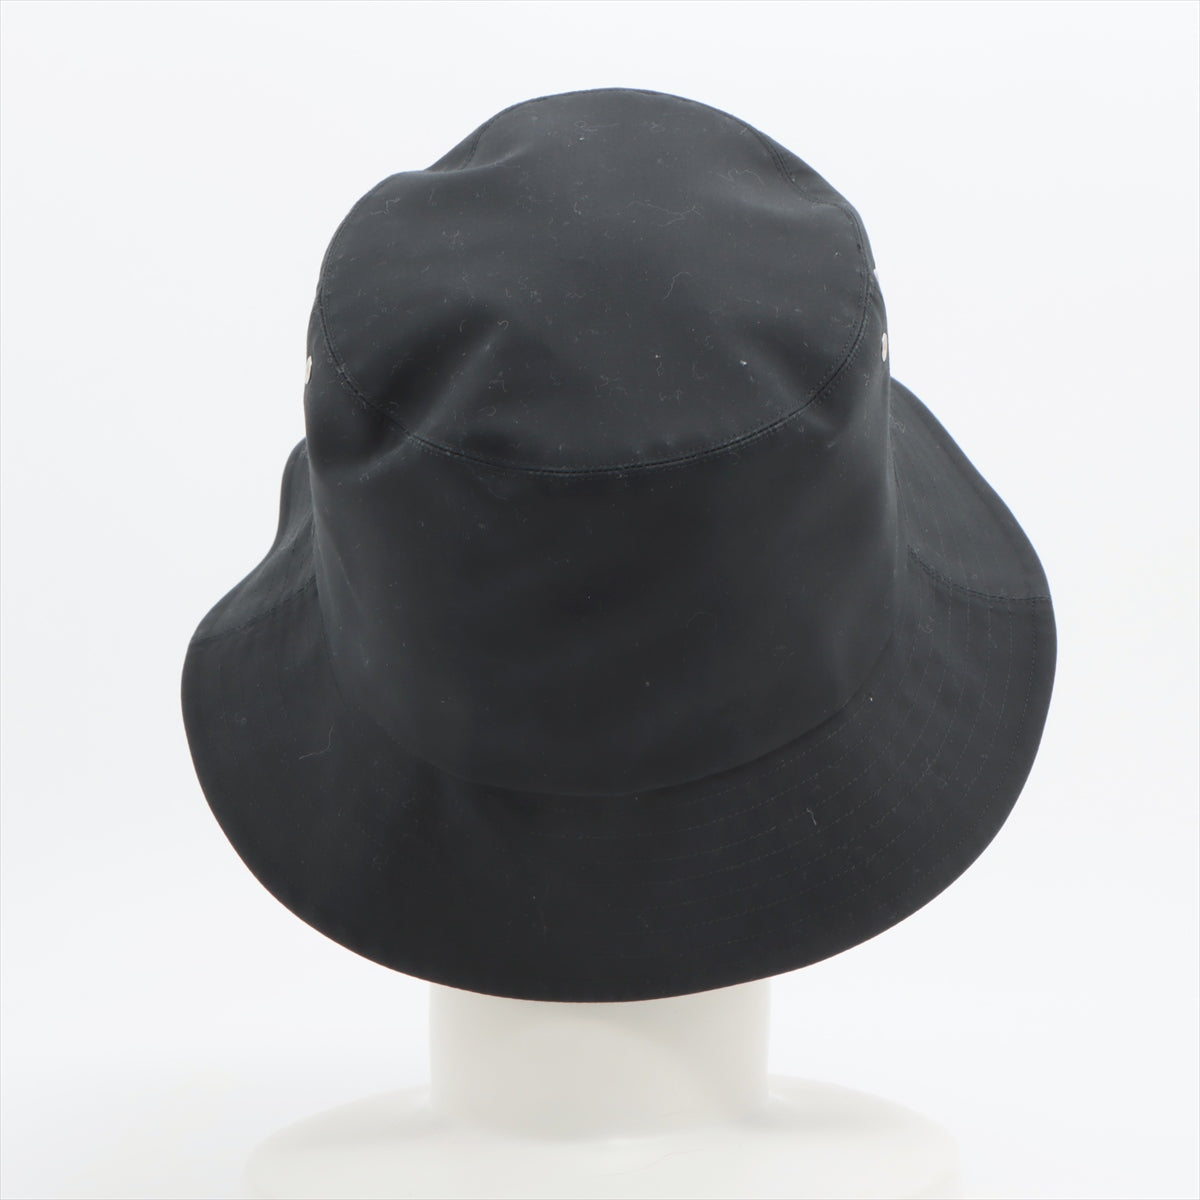 Christian Dior Teddy Oblique Reversible Hat Hat 57 Polyester x cotton x polyurethane Black